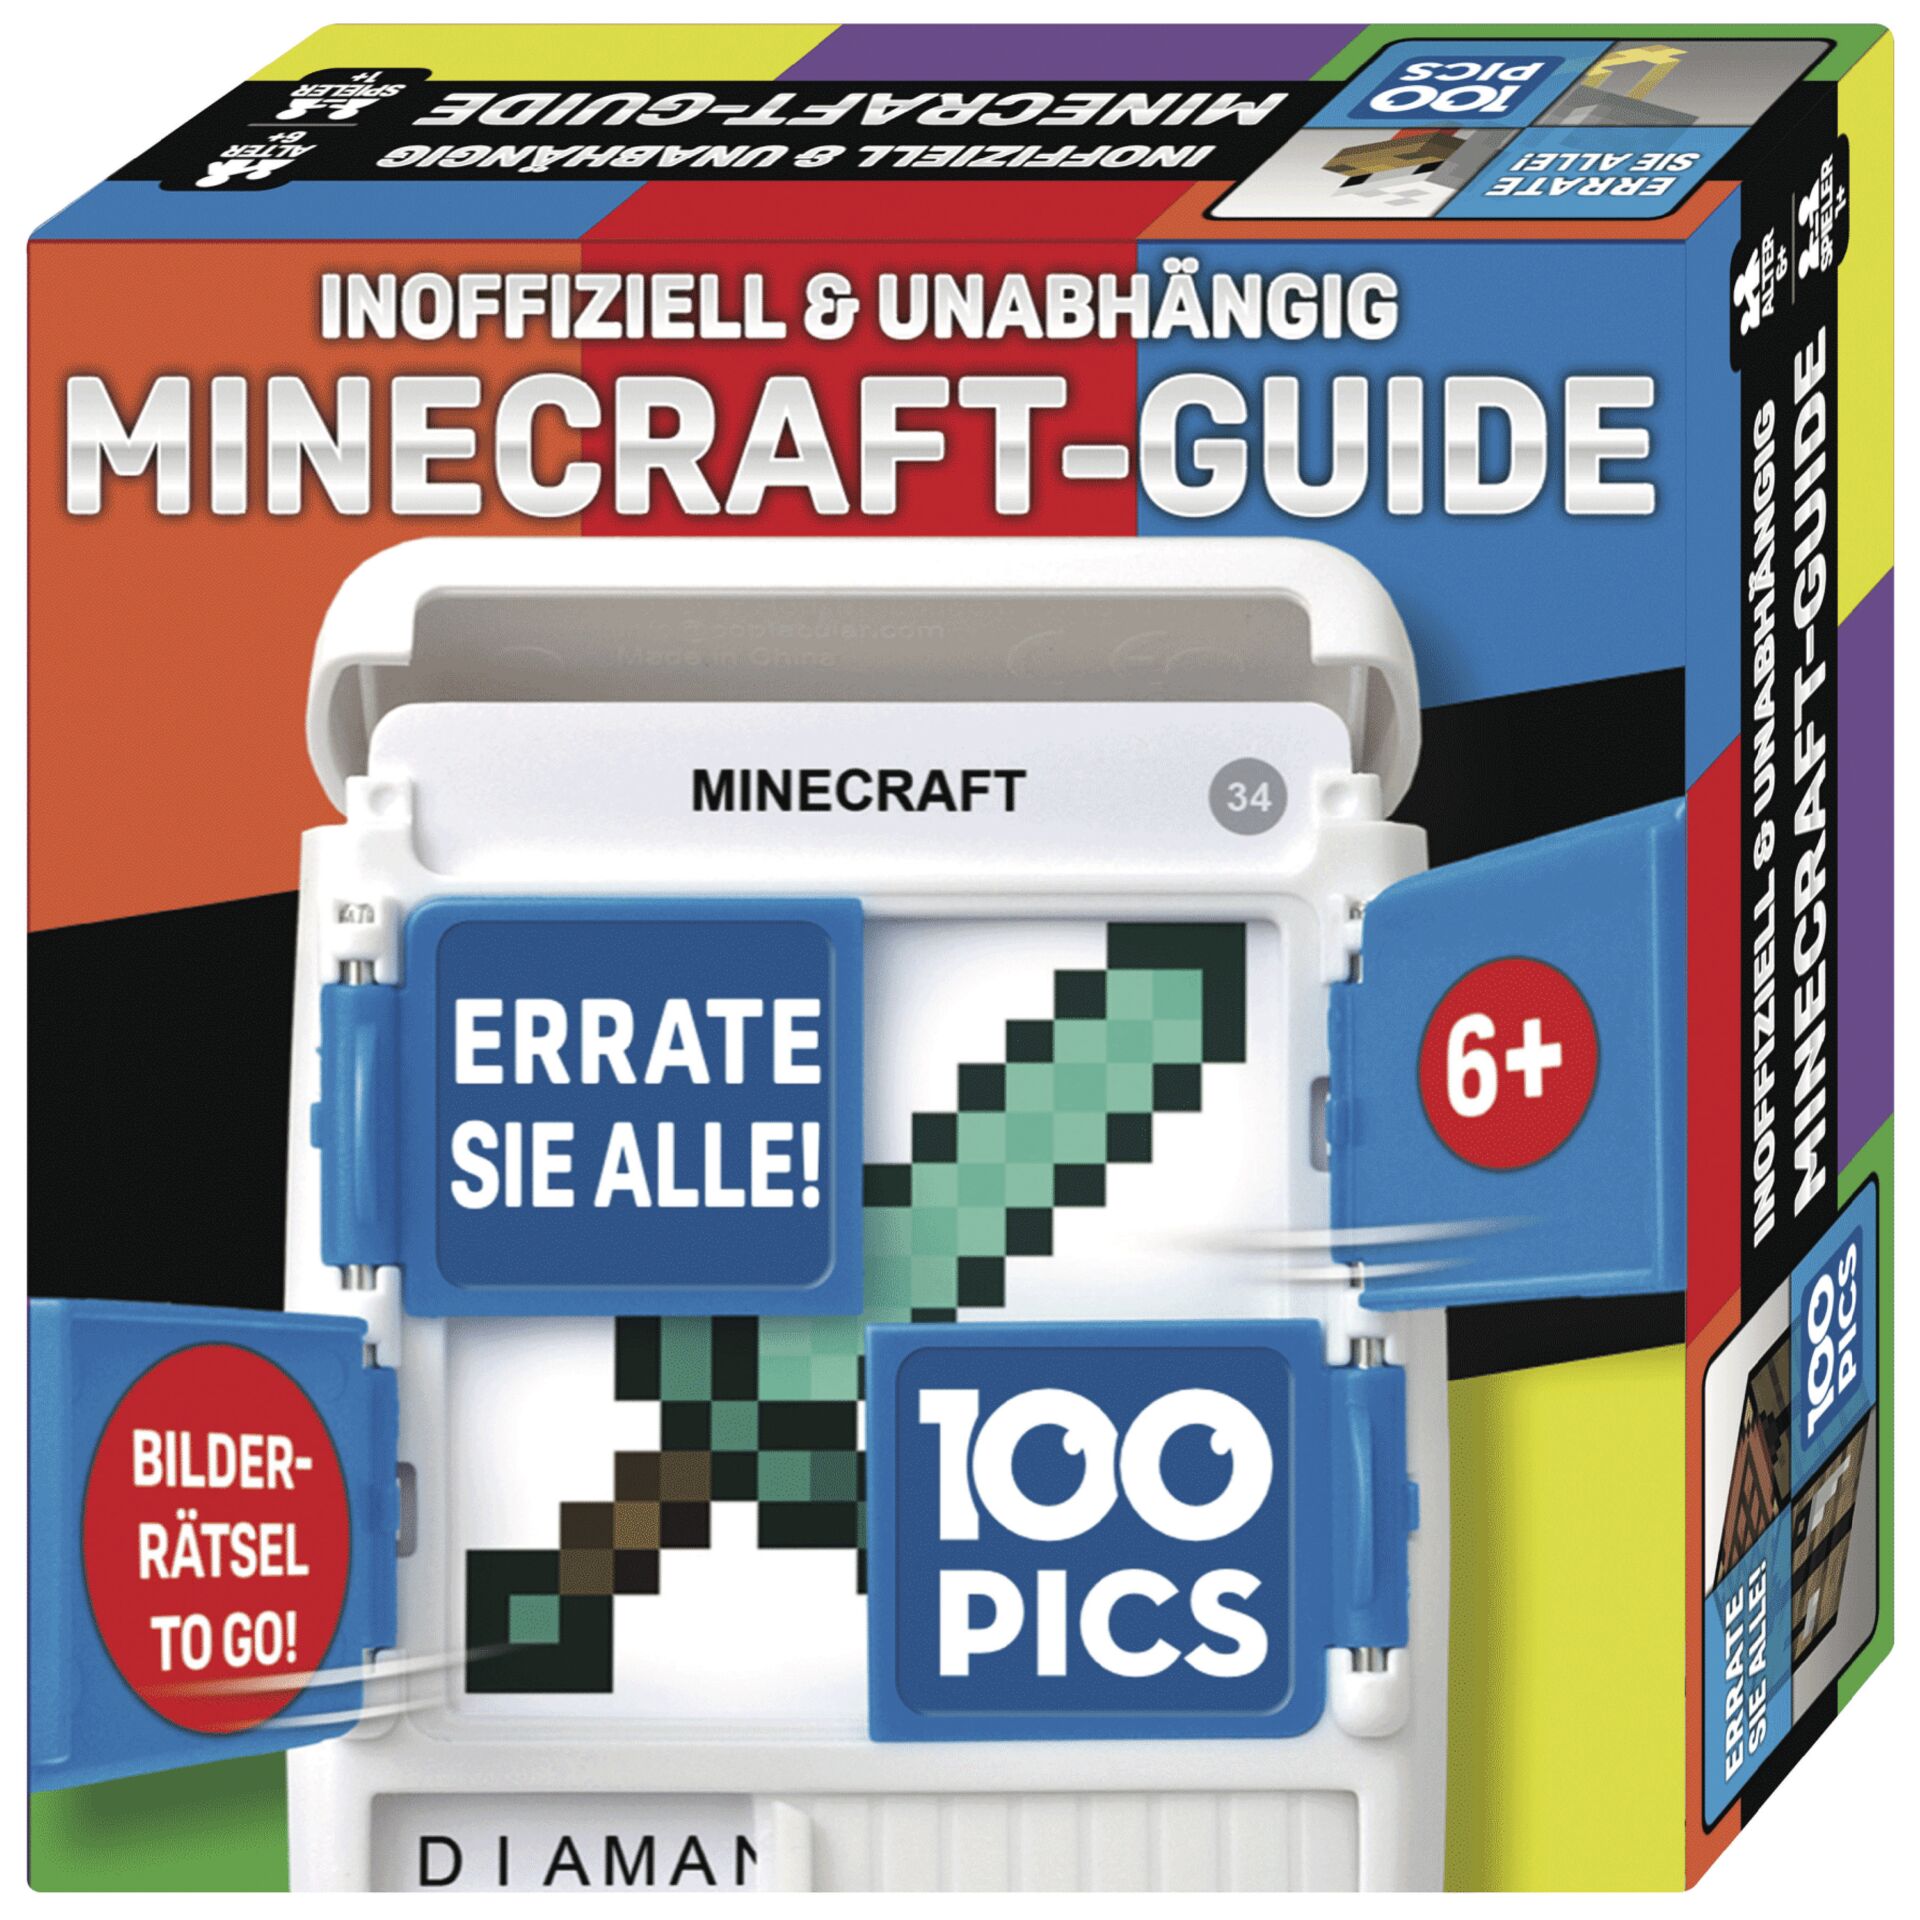 100 PICS Minecraft-Guide (inoffiziell & unabhaengig) (d) 823244_00